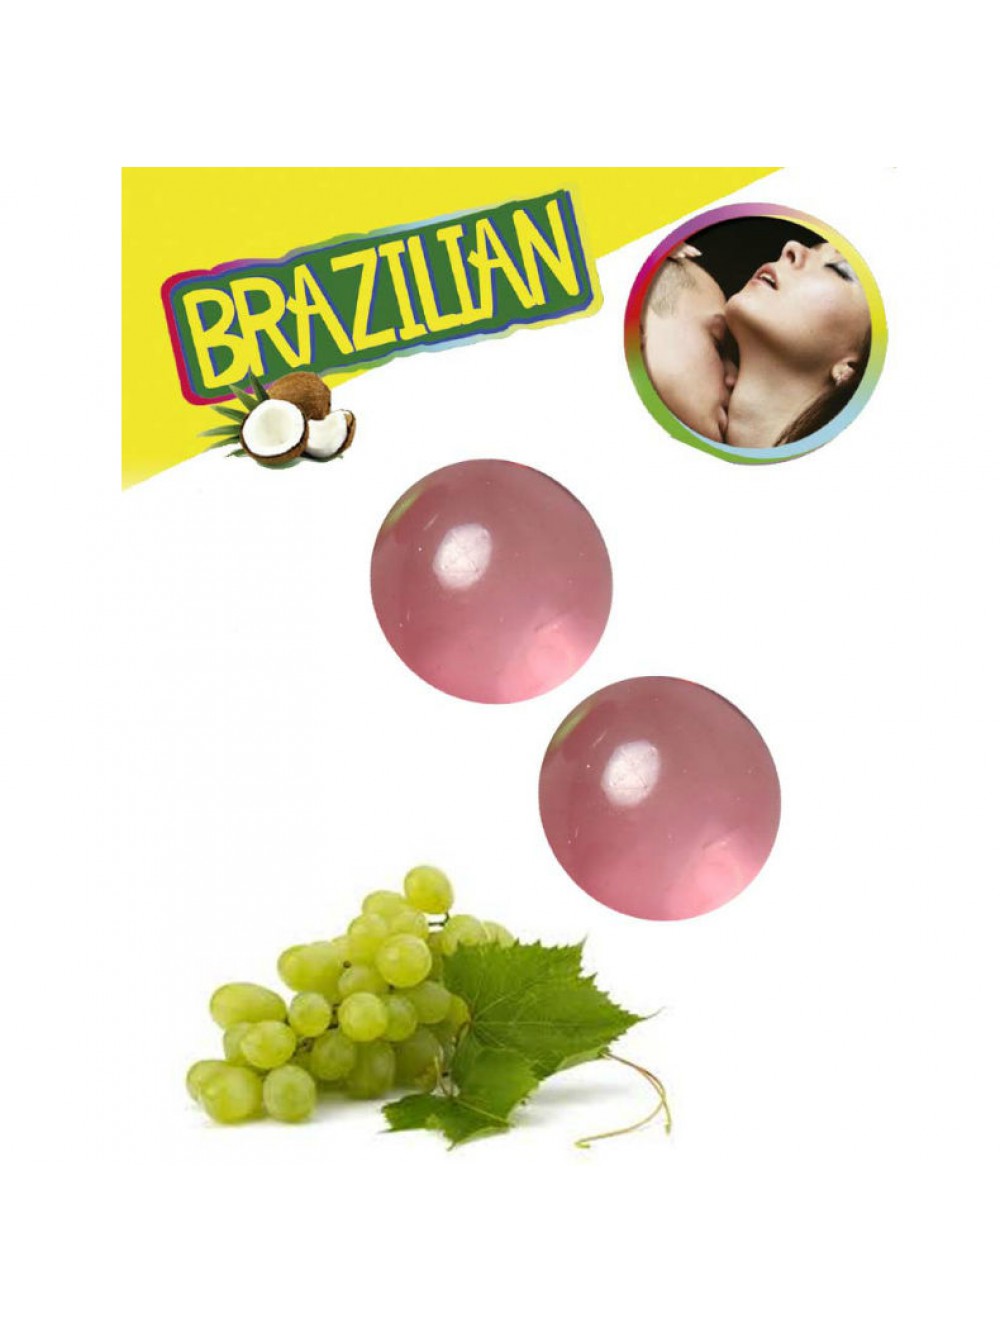 2 BRAZILIAN BALLS GRAPE 8435097633855